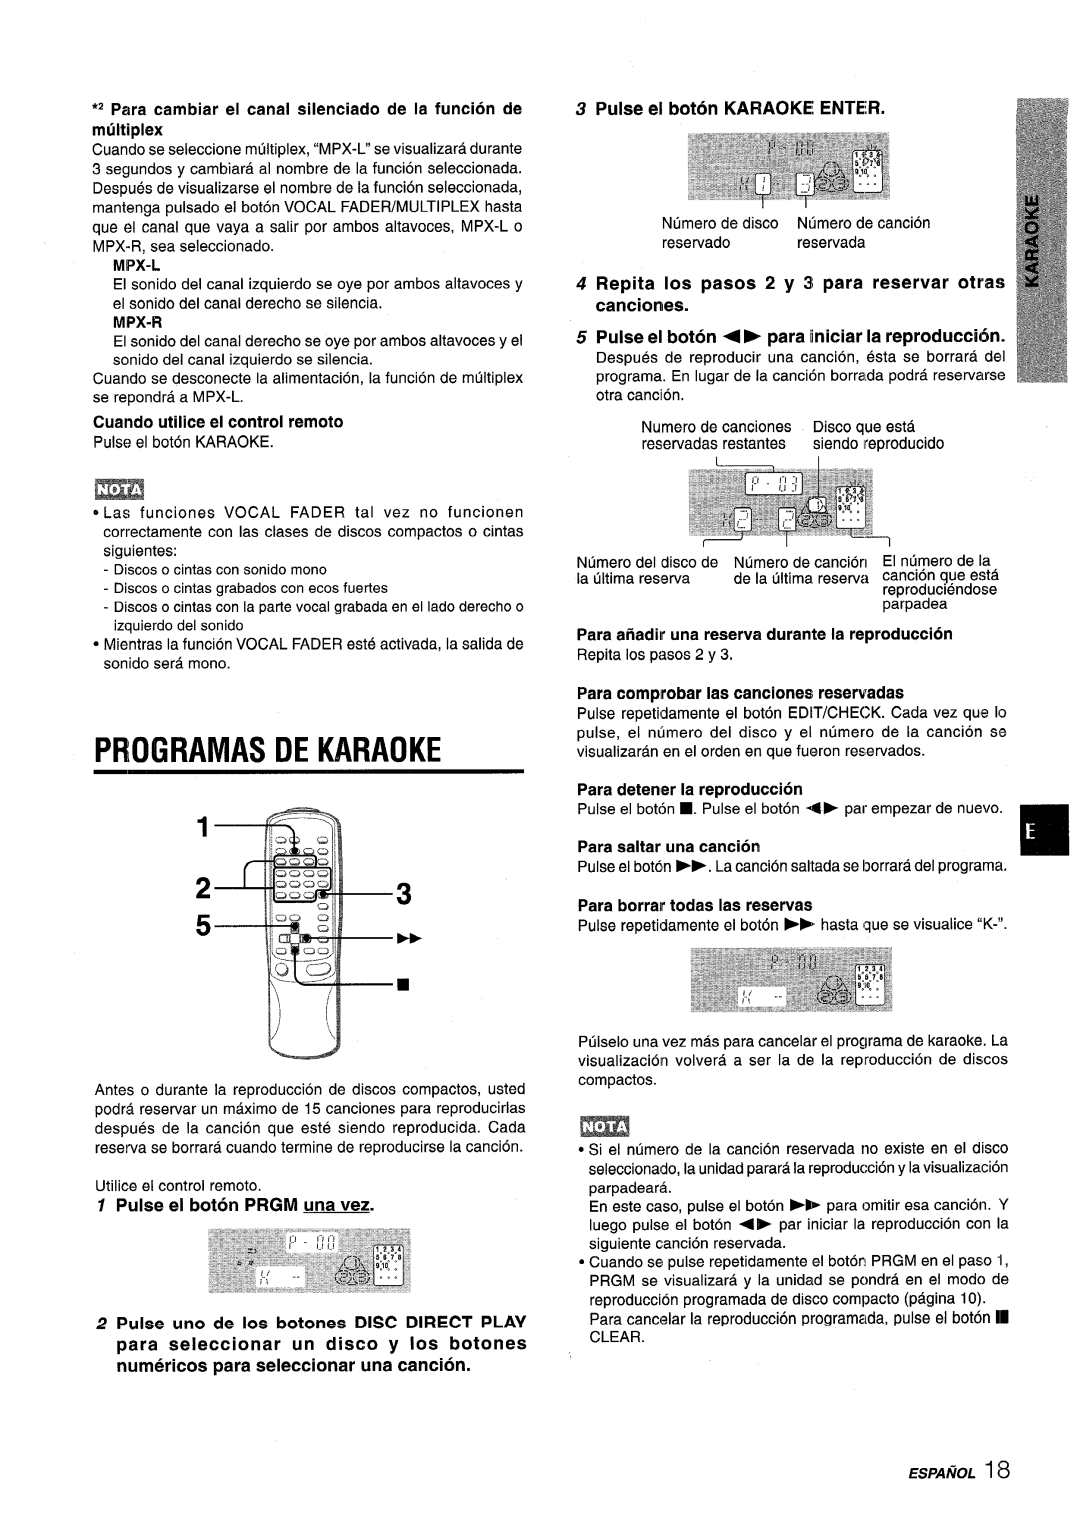 Aiwa NSX-V9000 manual Programas De Karaoke, Pulse el boton PRGM una vez, Pulse el boton KARAOKE ENTER, Para, detener 